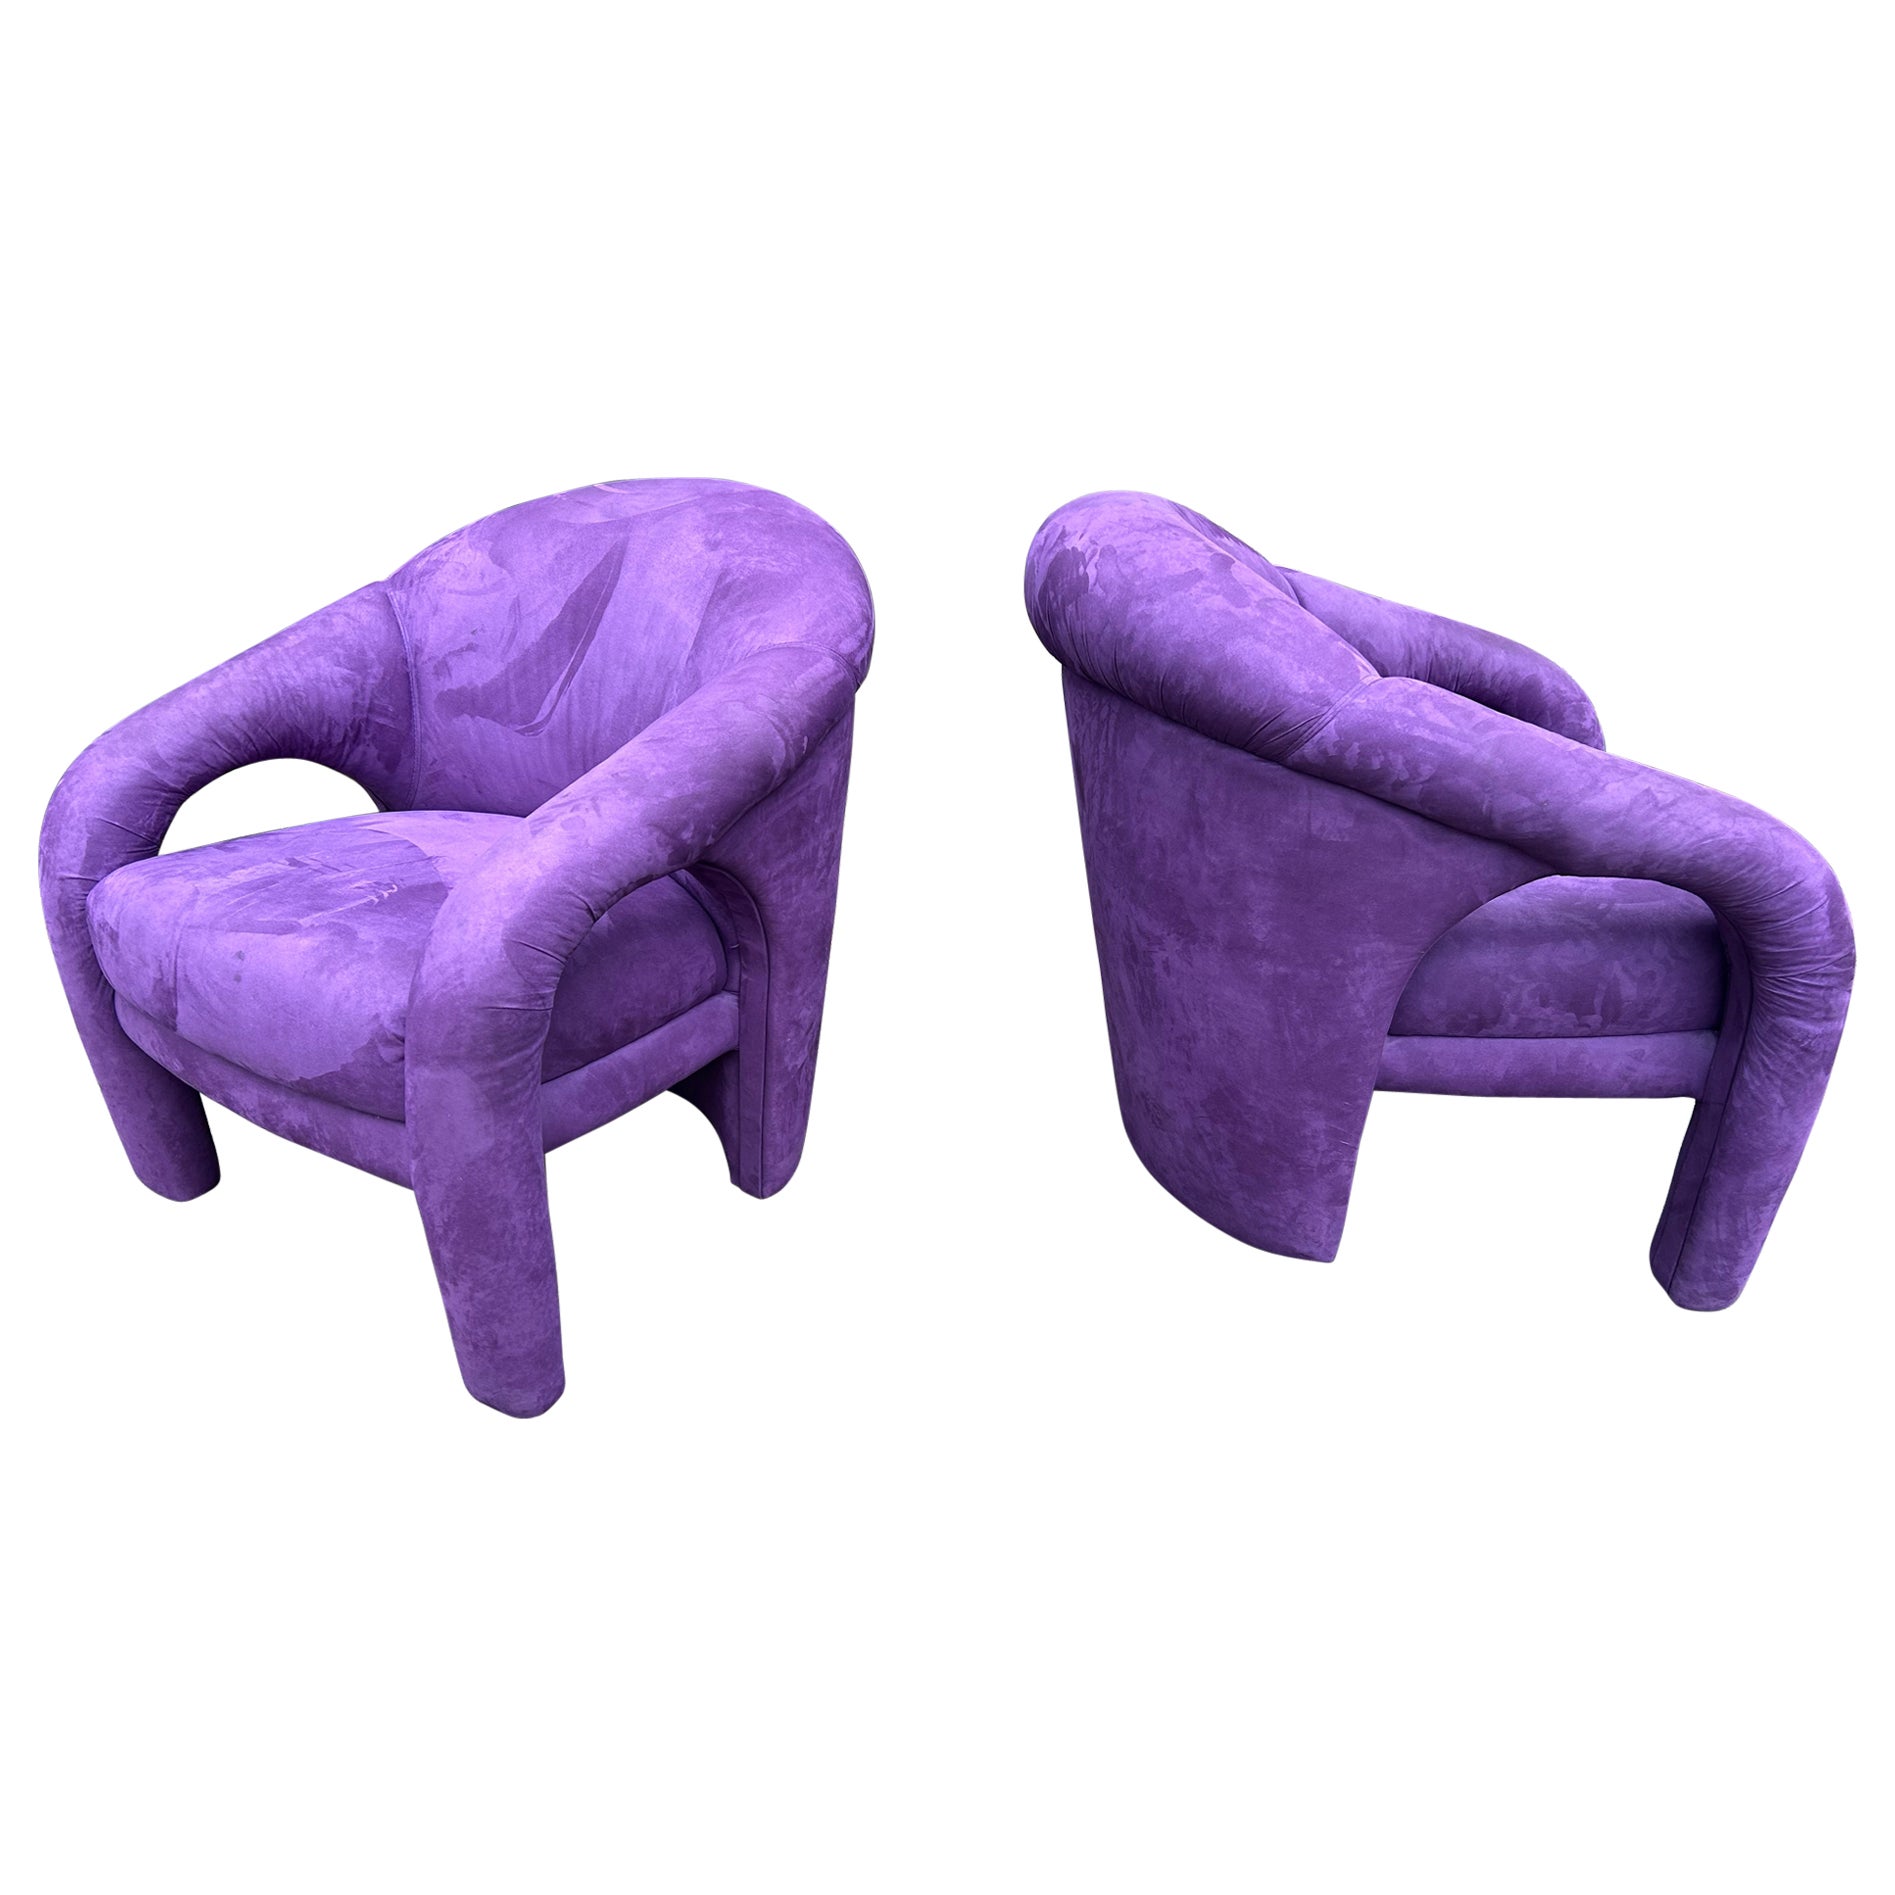 Sensational Pair Vladimir Kagan Sculptural Ultra-suede Upholstered Lounge Chairs For Sale